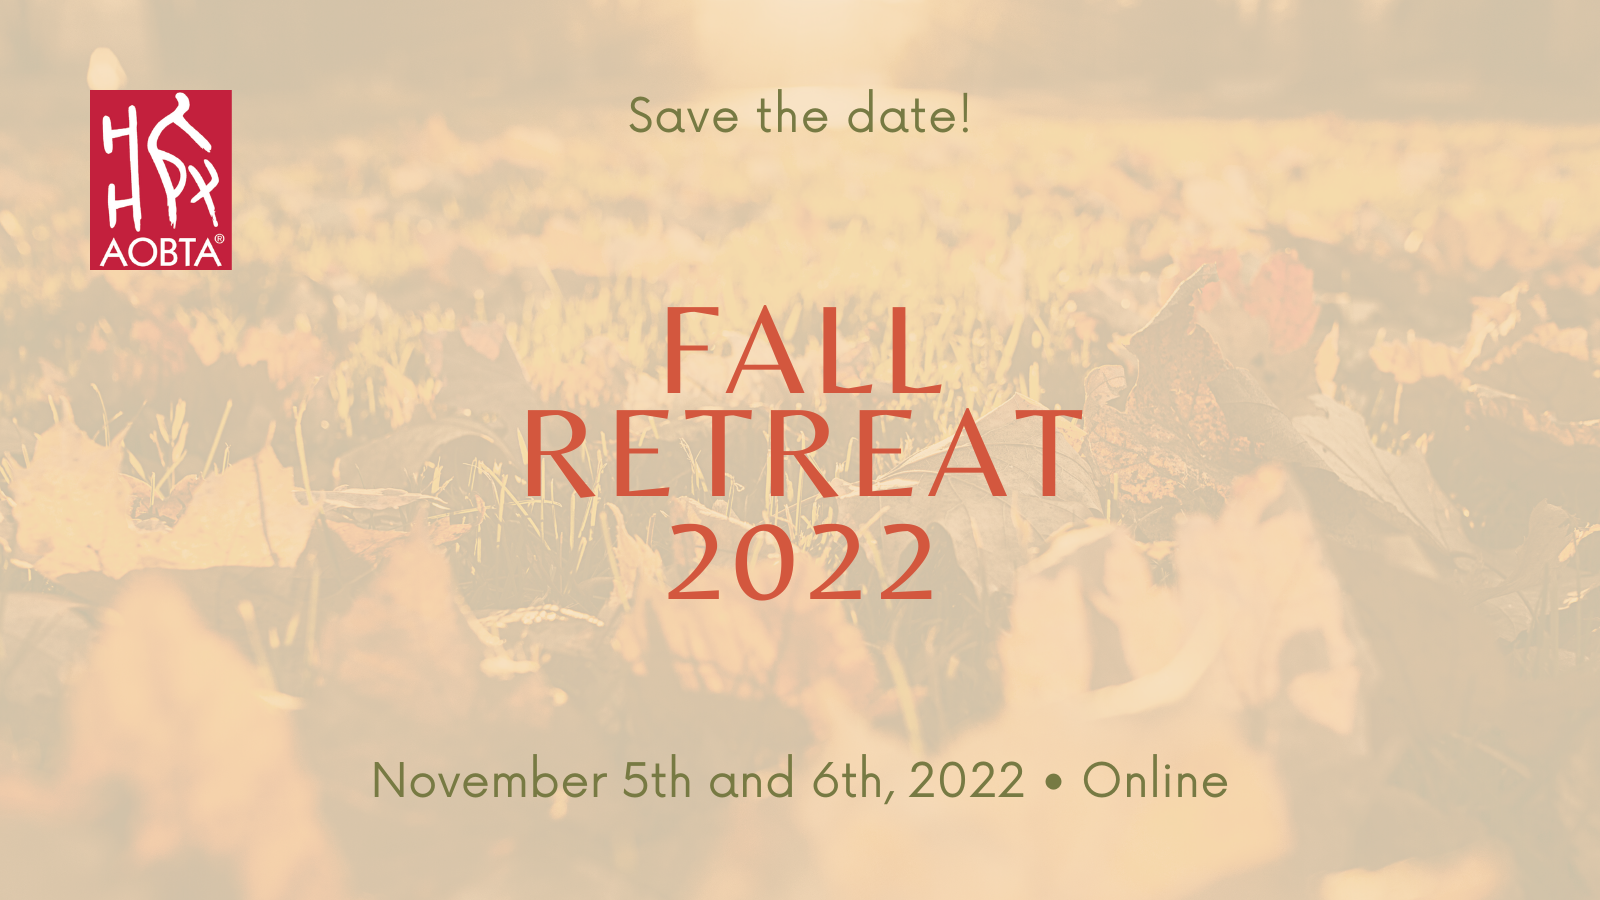 Fall Retreat 2022